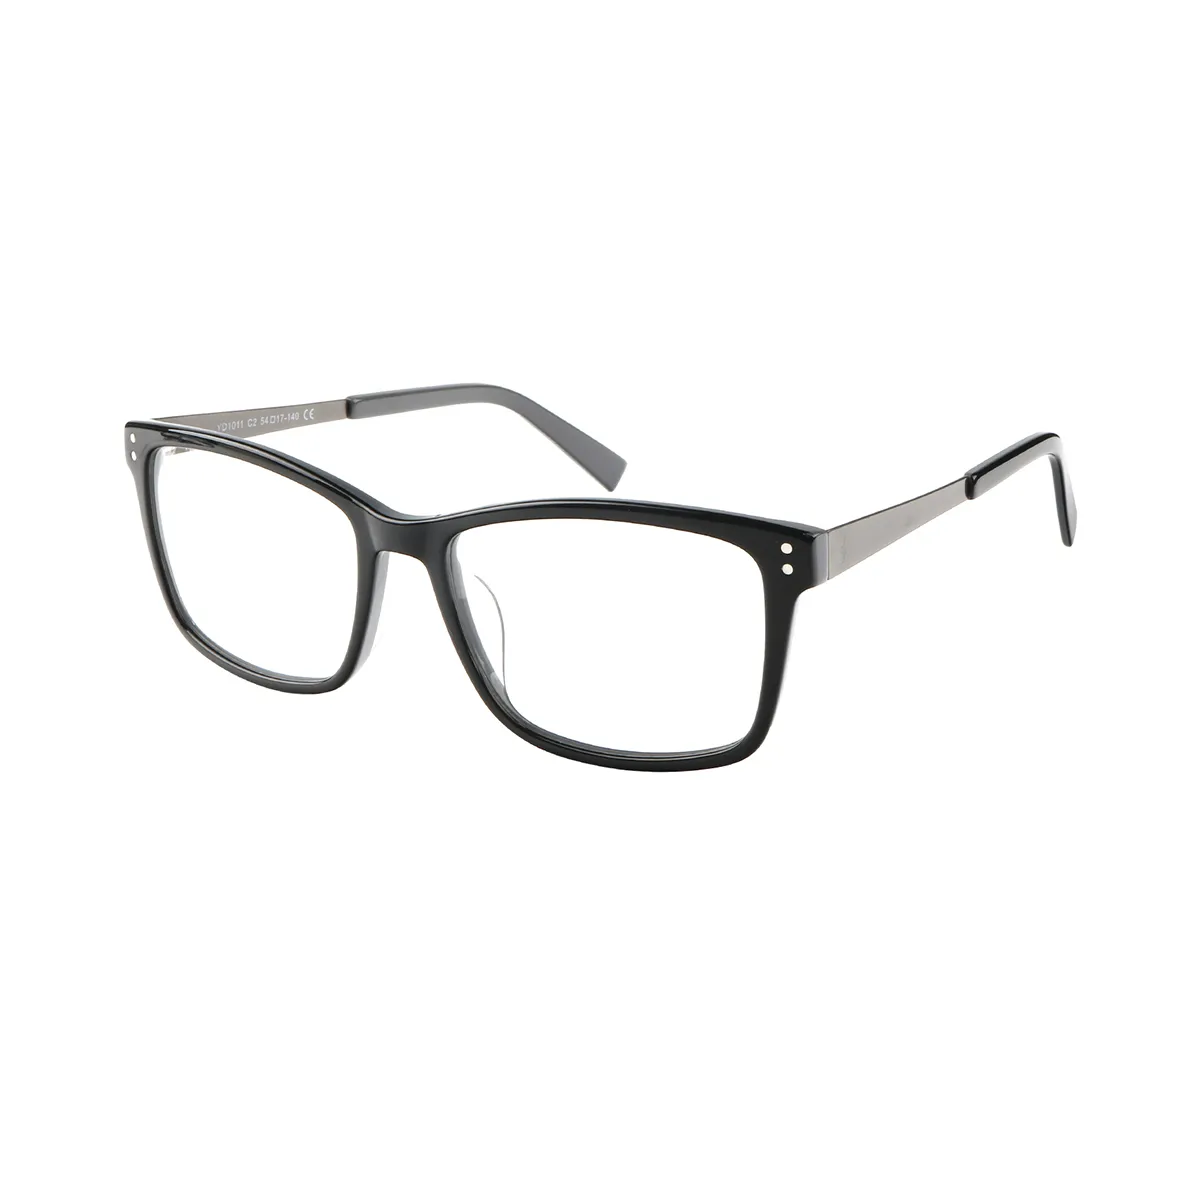 Armison - Square Black Glasses for Men